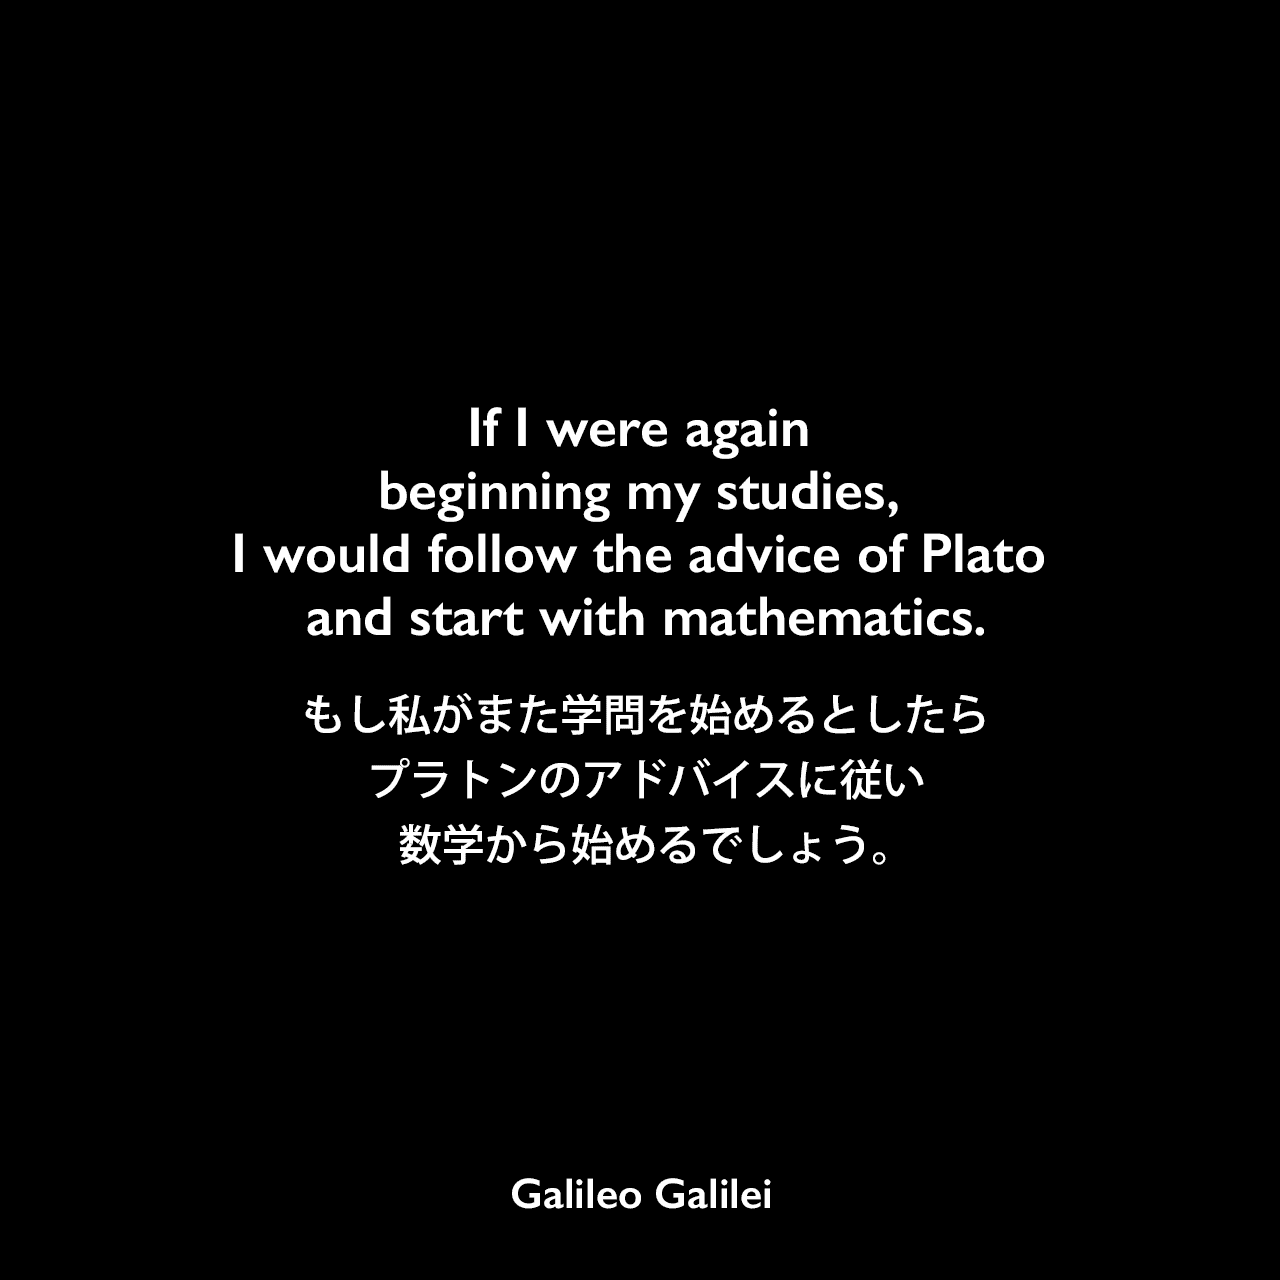 If I were again beginning my studies, I would follow the advice of Plato and start with mathematics.もし私がまた学問を始めるとしたら、プラトンのアドバイスに従い数学から始めるでしょう。Galileo Galilei